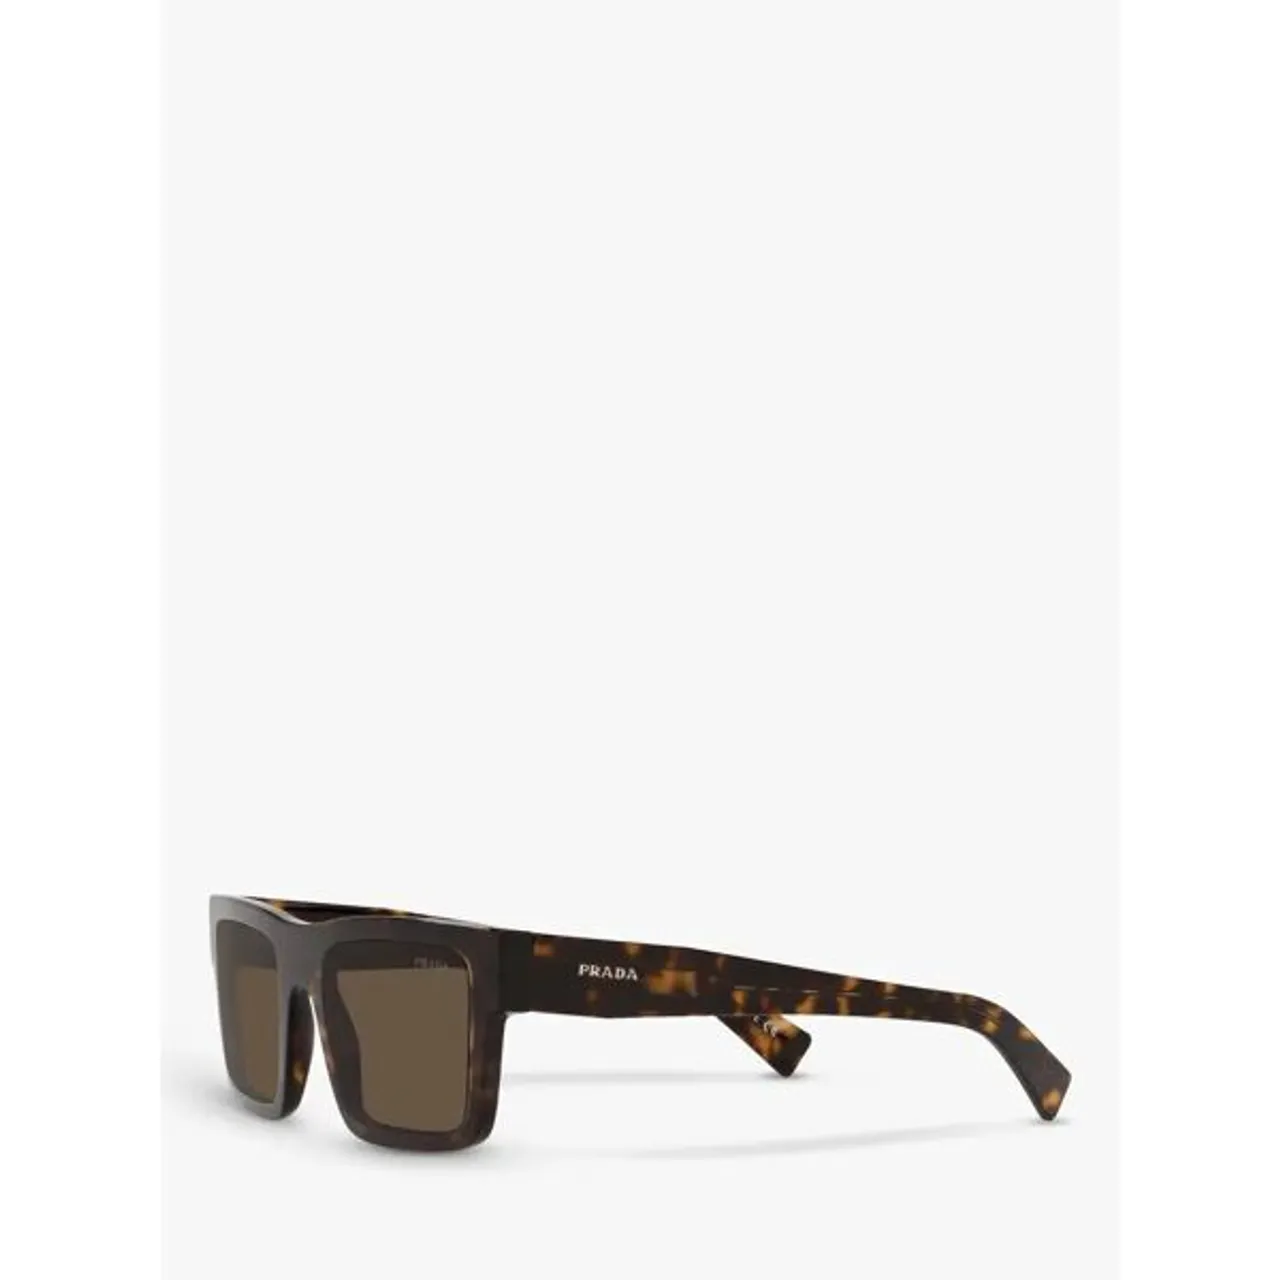 Prada PR 19WS Men's Tortoiseshell Square Sunglasses, Brown - Brown - Male